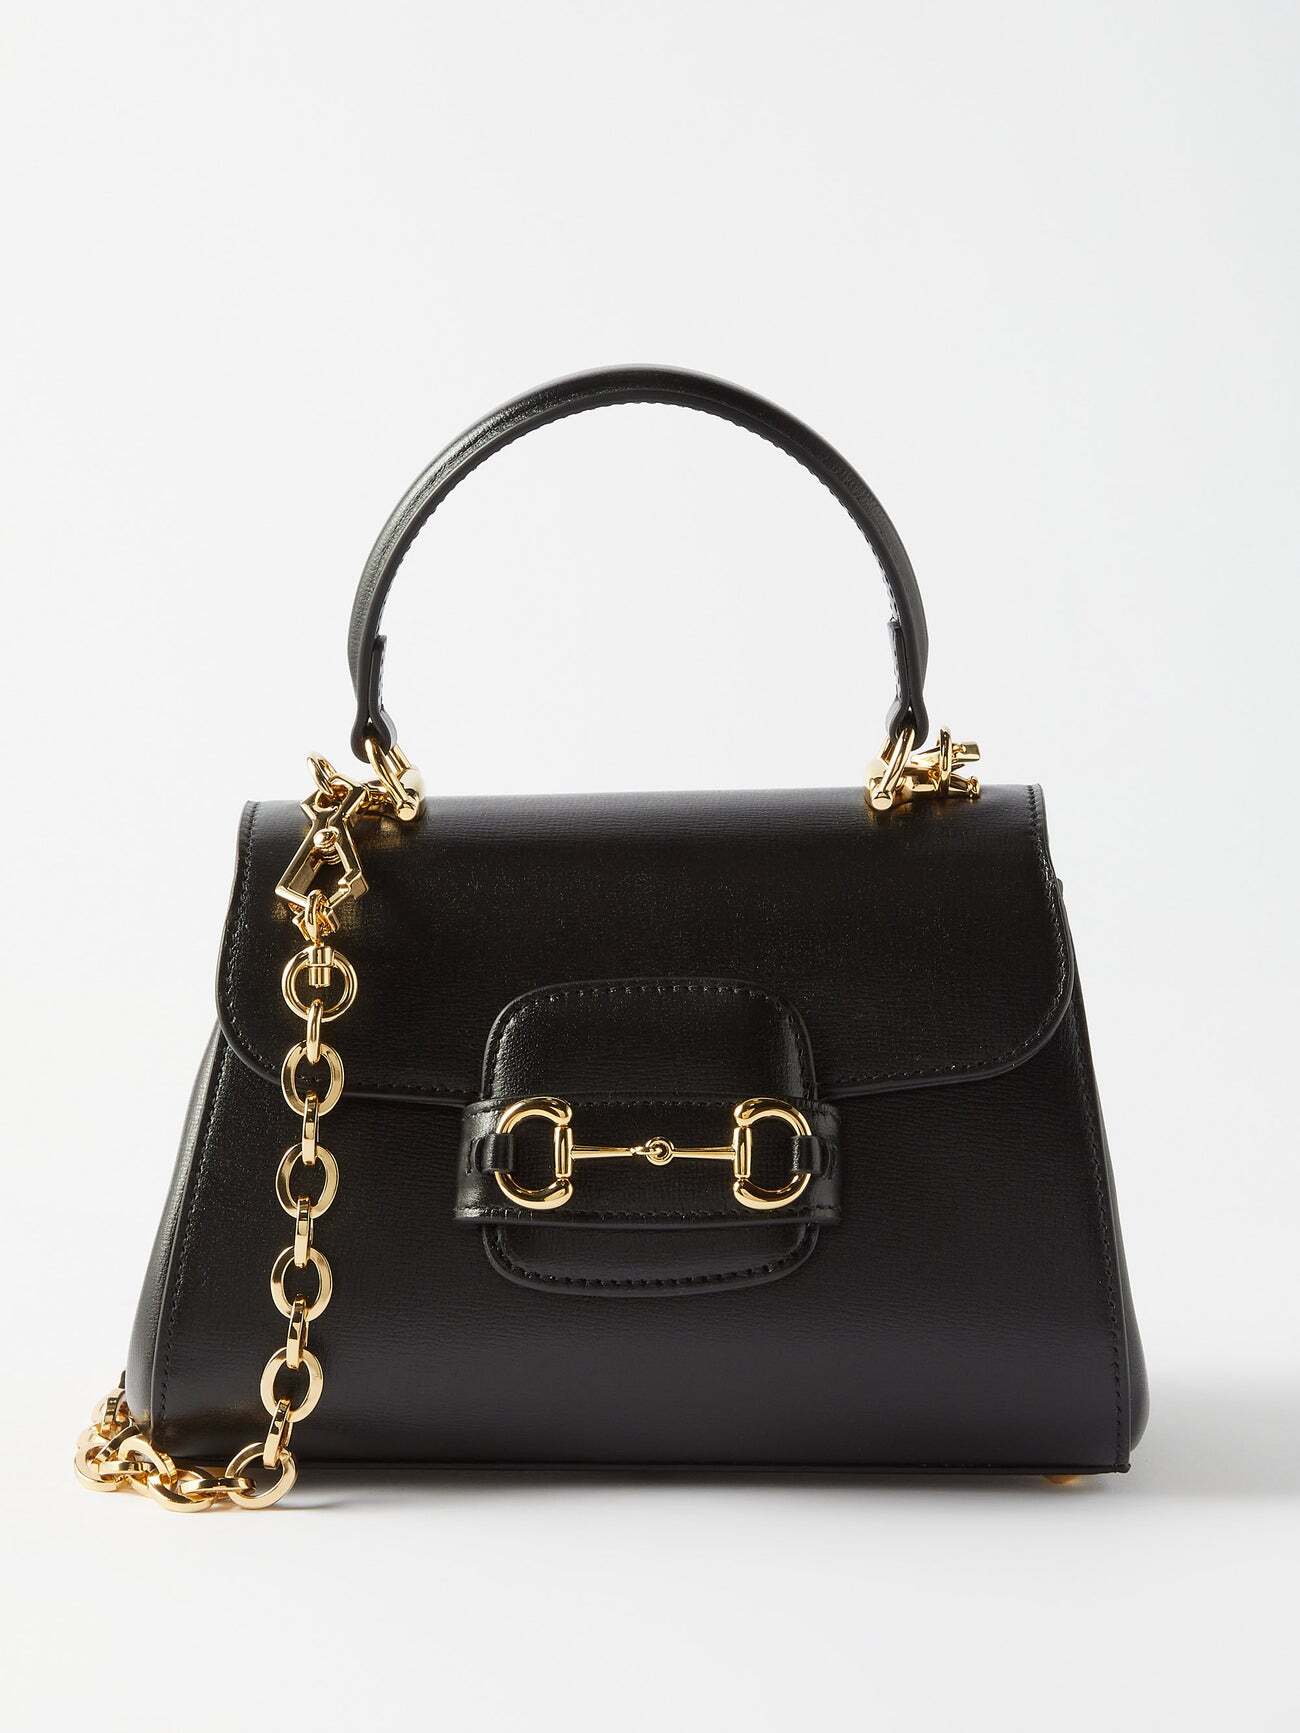 Gucci - 1955 Horsebit Mini Leather Handbag - Womens - Black